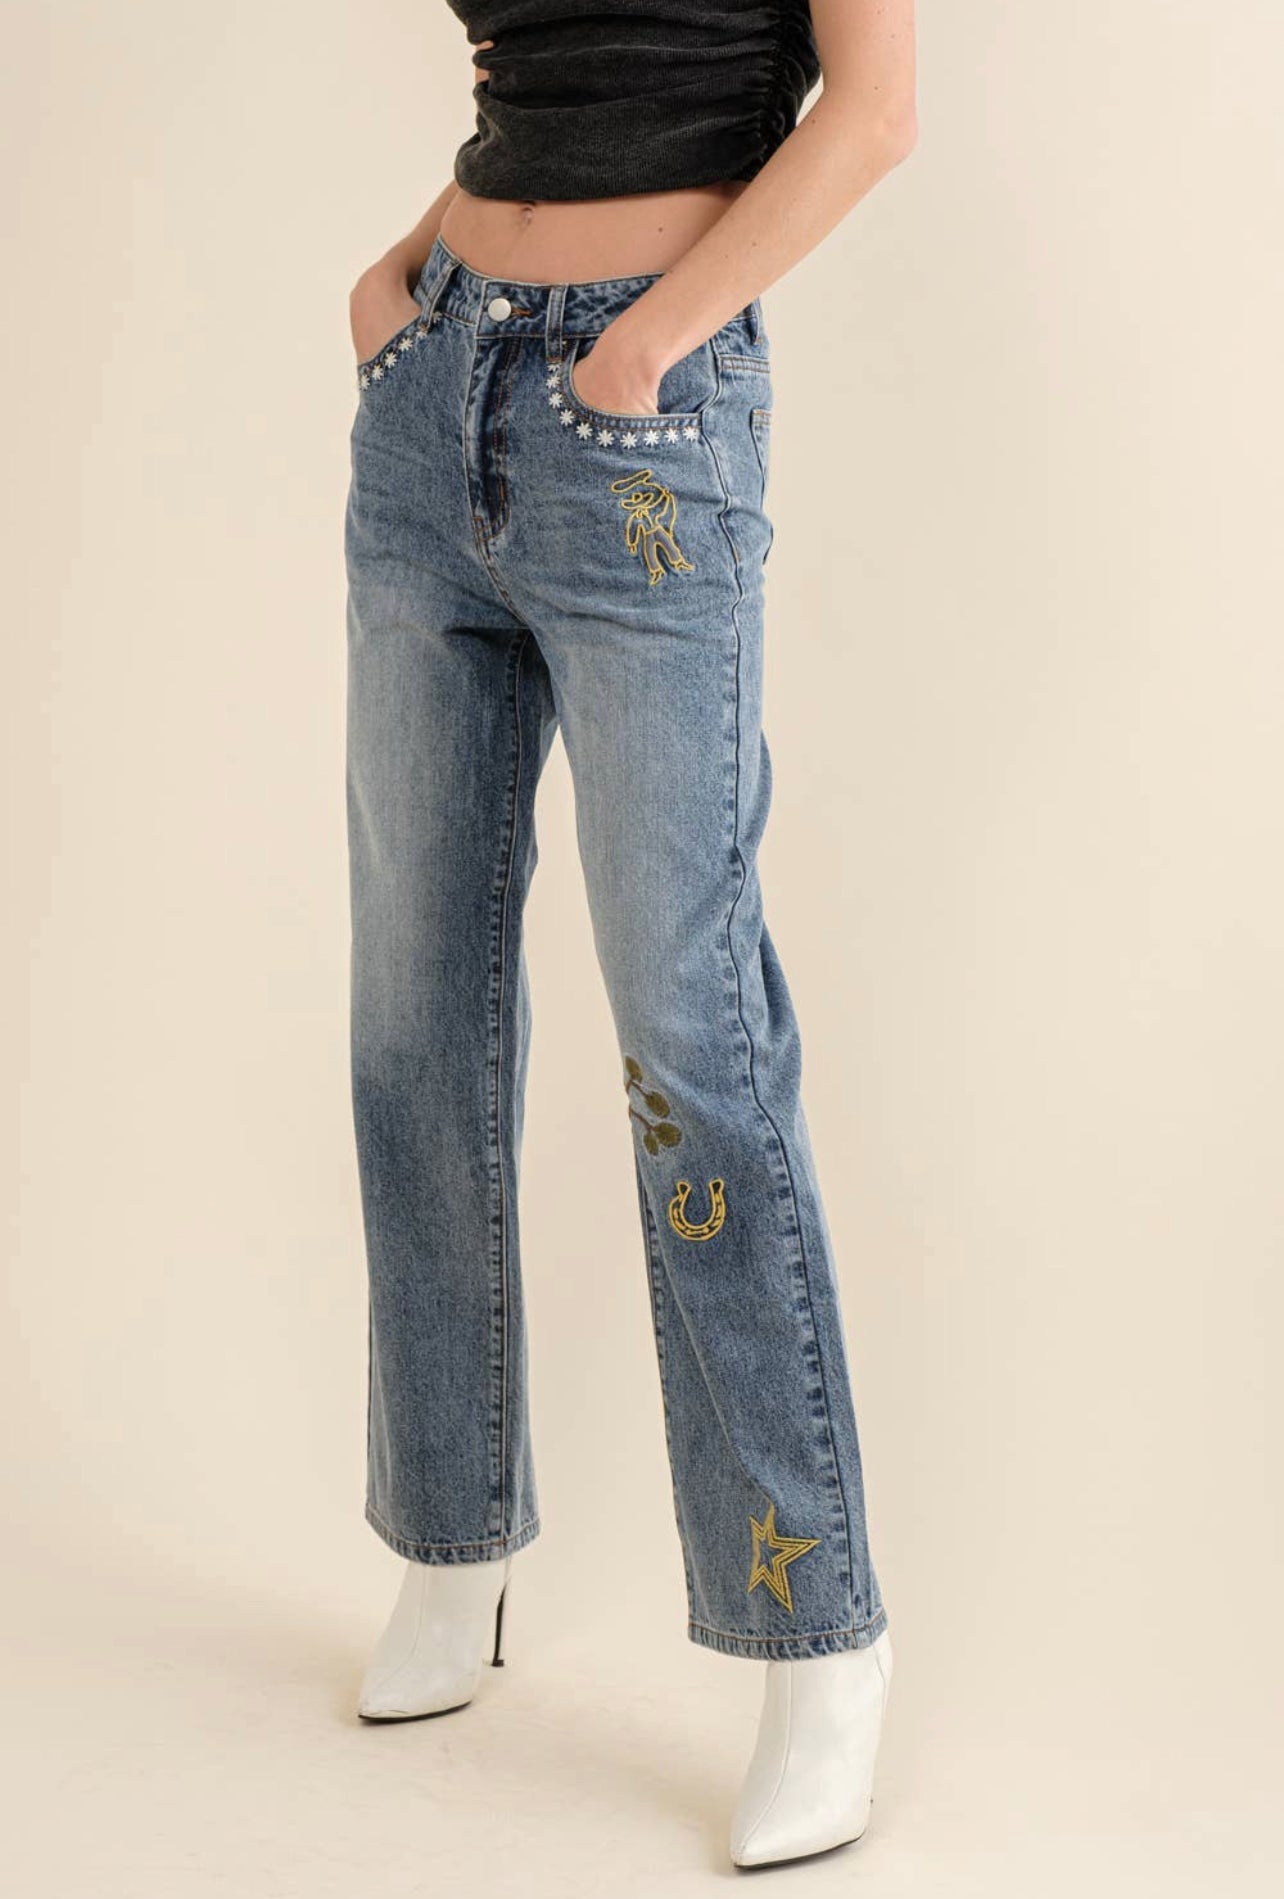 Western Embroidered Denim Jeans